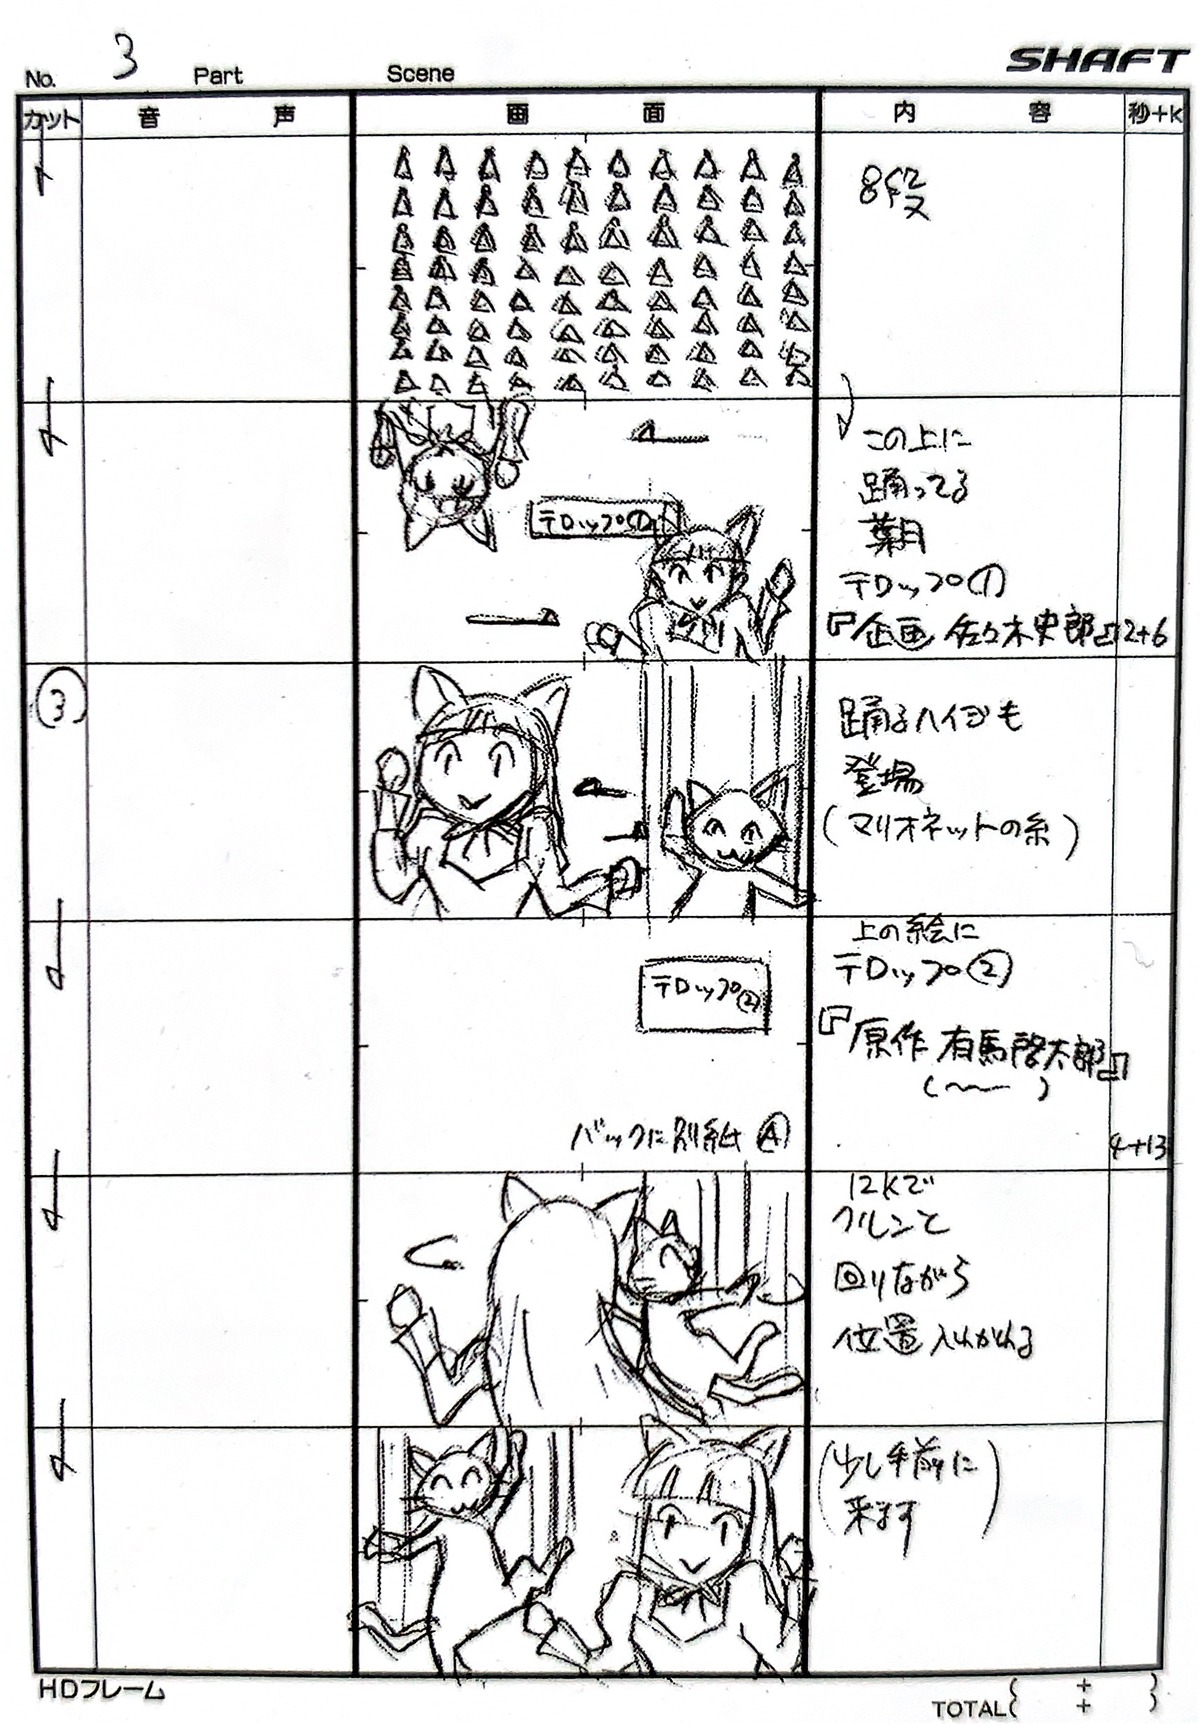 keizou_kusakawa production_materials storyboard tsukuyomi_moon_phase